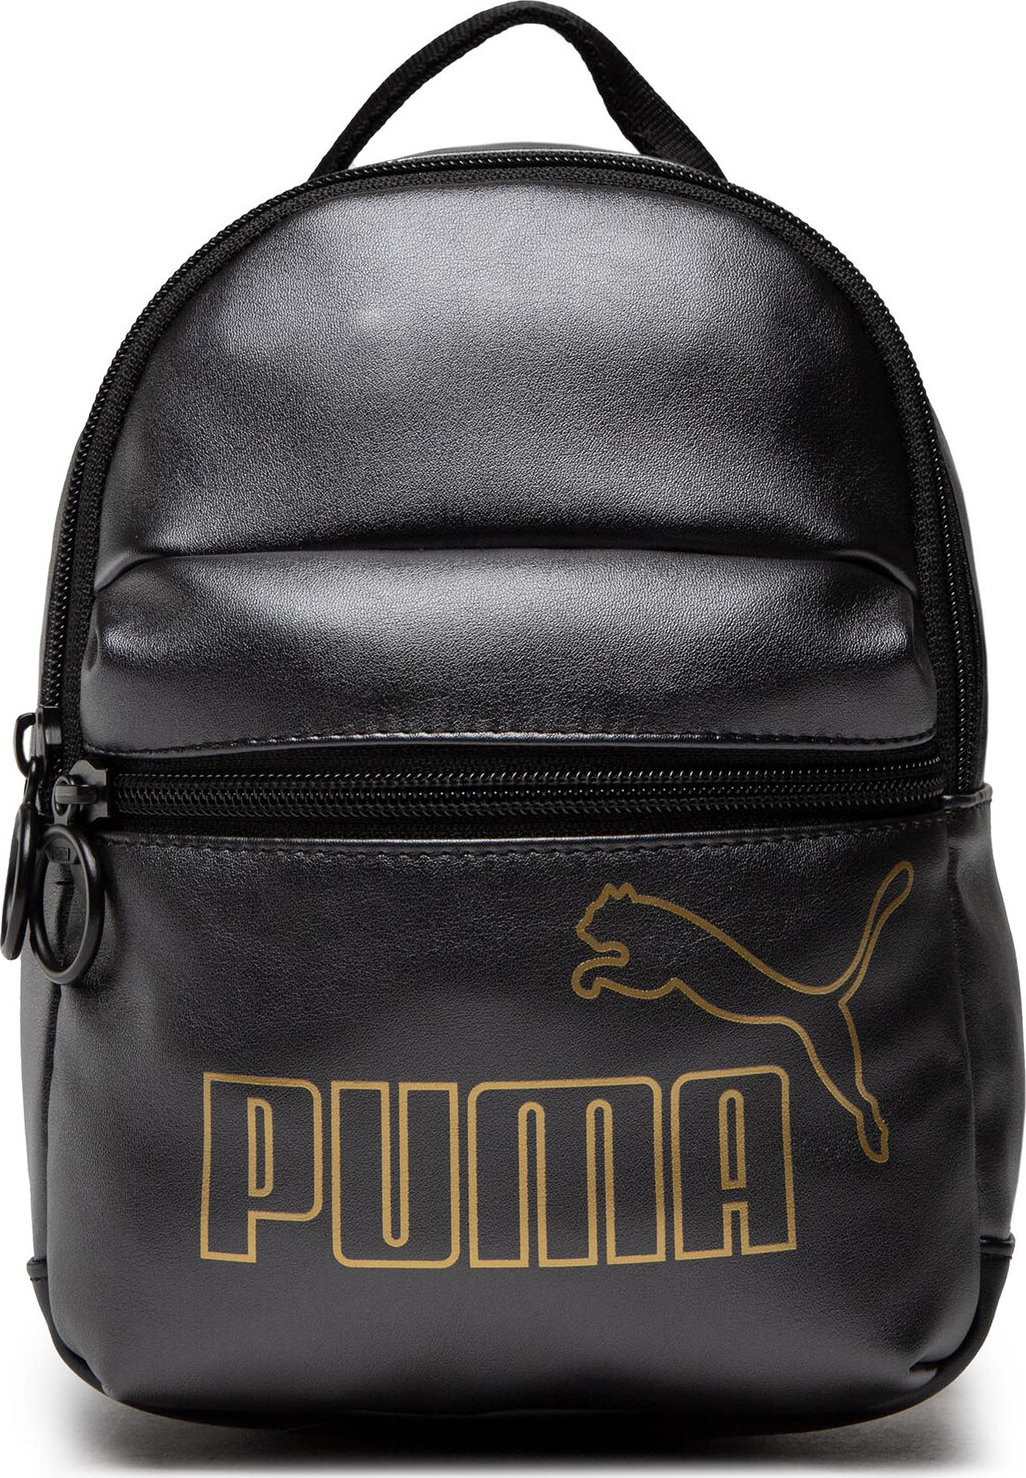 Batoh Puma Core Up Minime Backpack 791540 01 Puma Black/Metallic